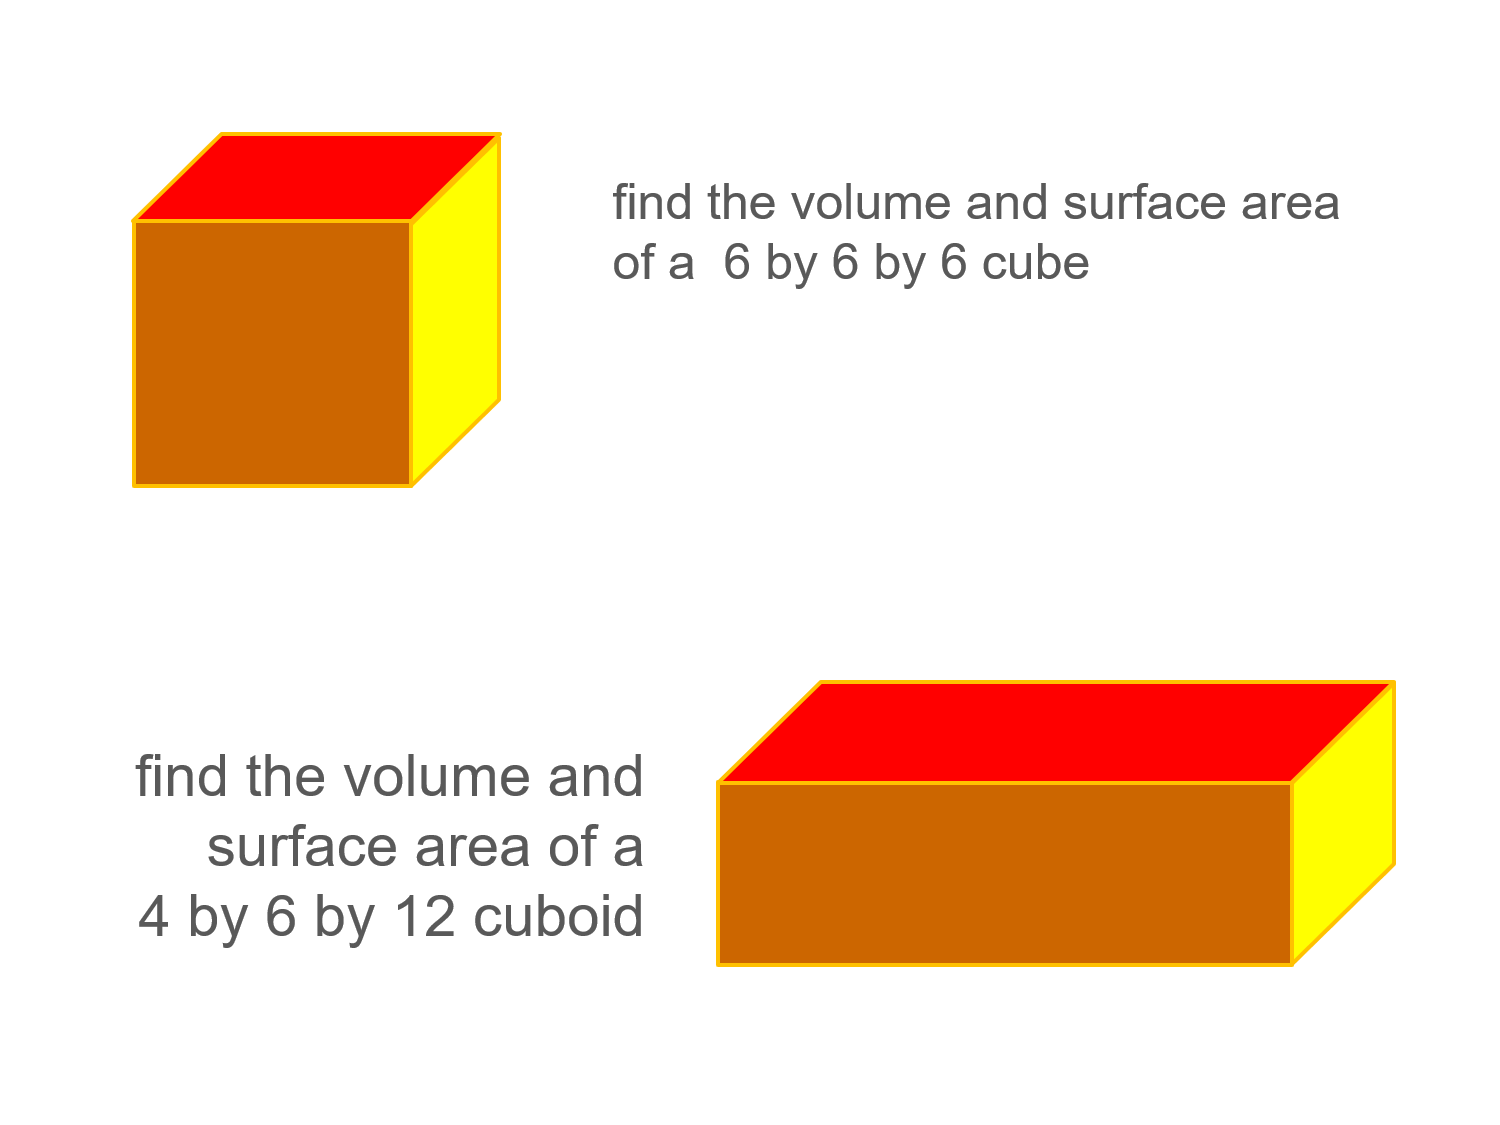 area of cuboid presentation